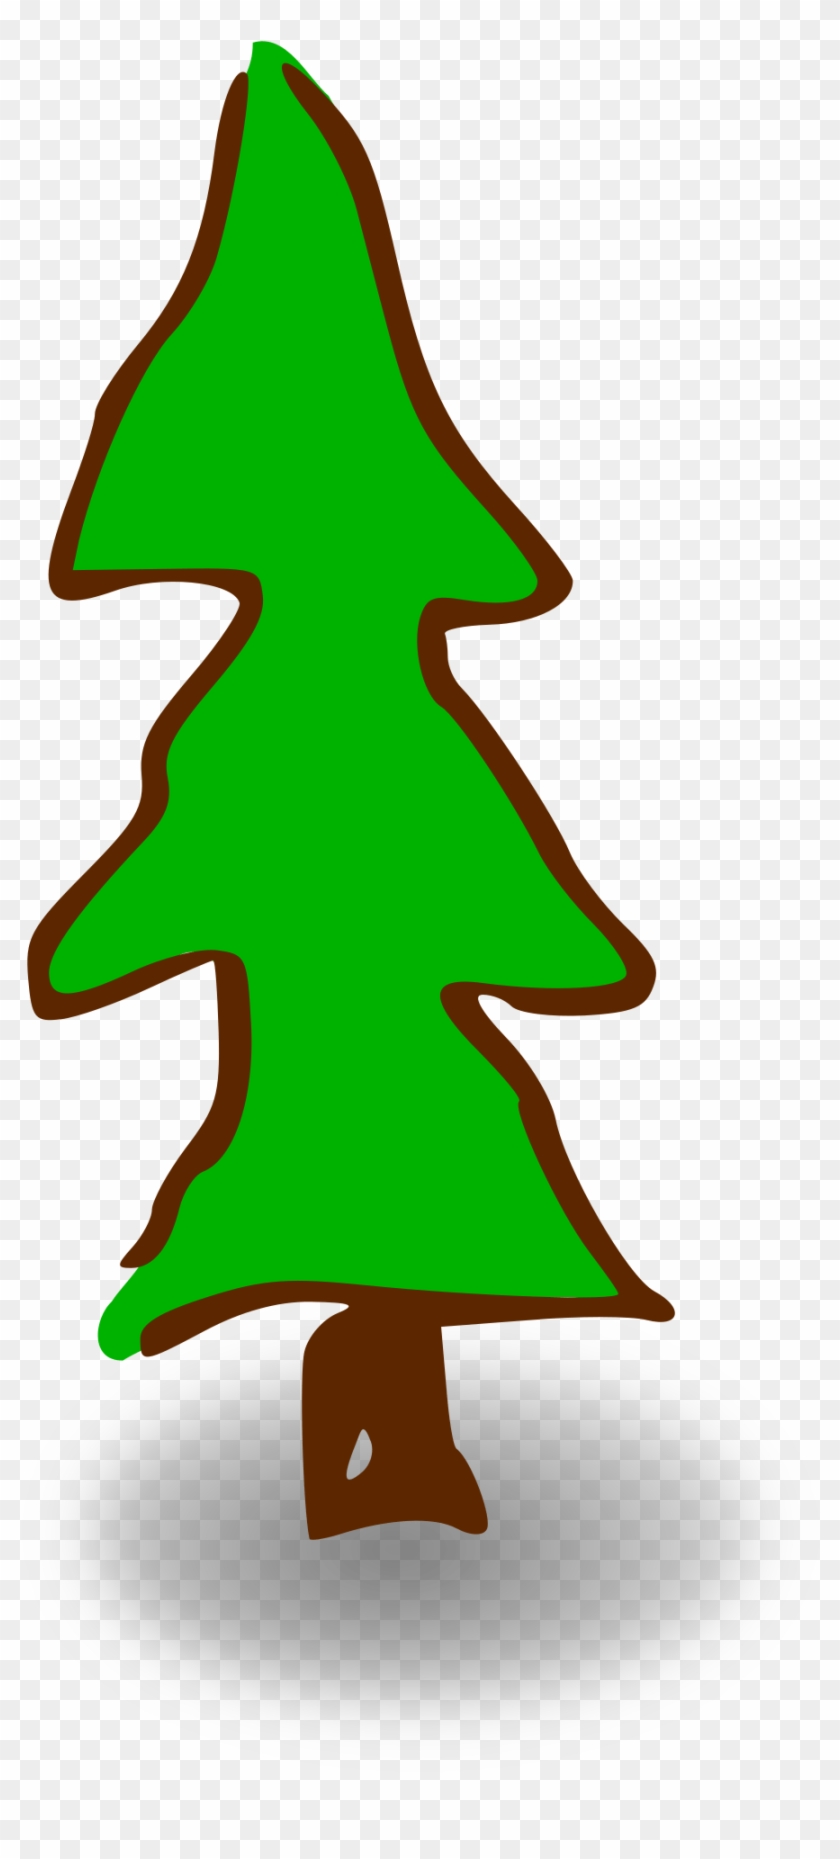 Nicubunu Rpg Map Symbols Tree 6 - Pine #995603